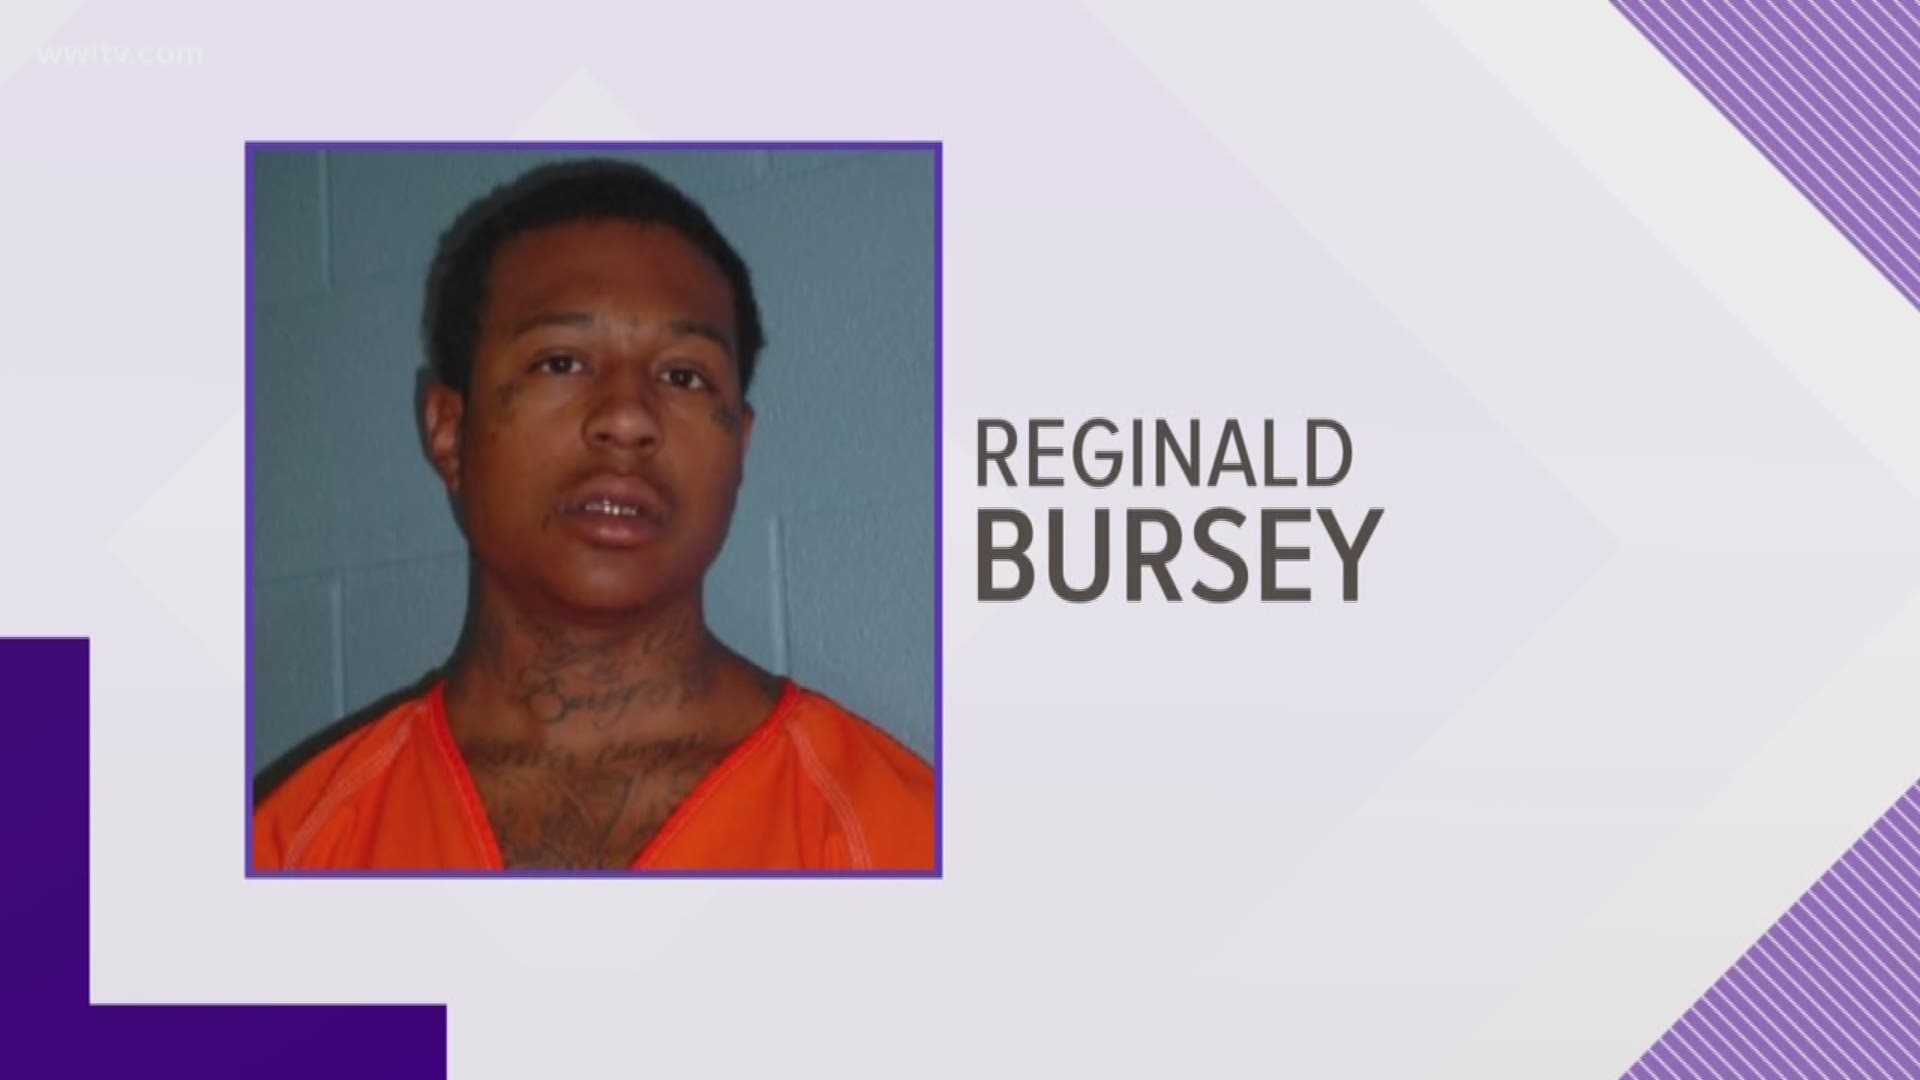 Reginald Romero Bursey is a career criminal, but his rap sheet in New Orleans is short.